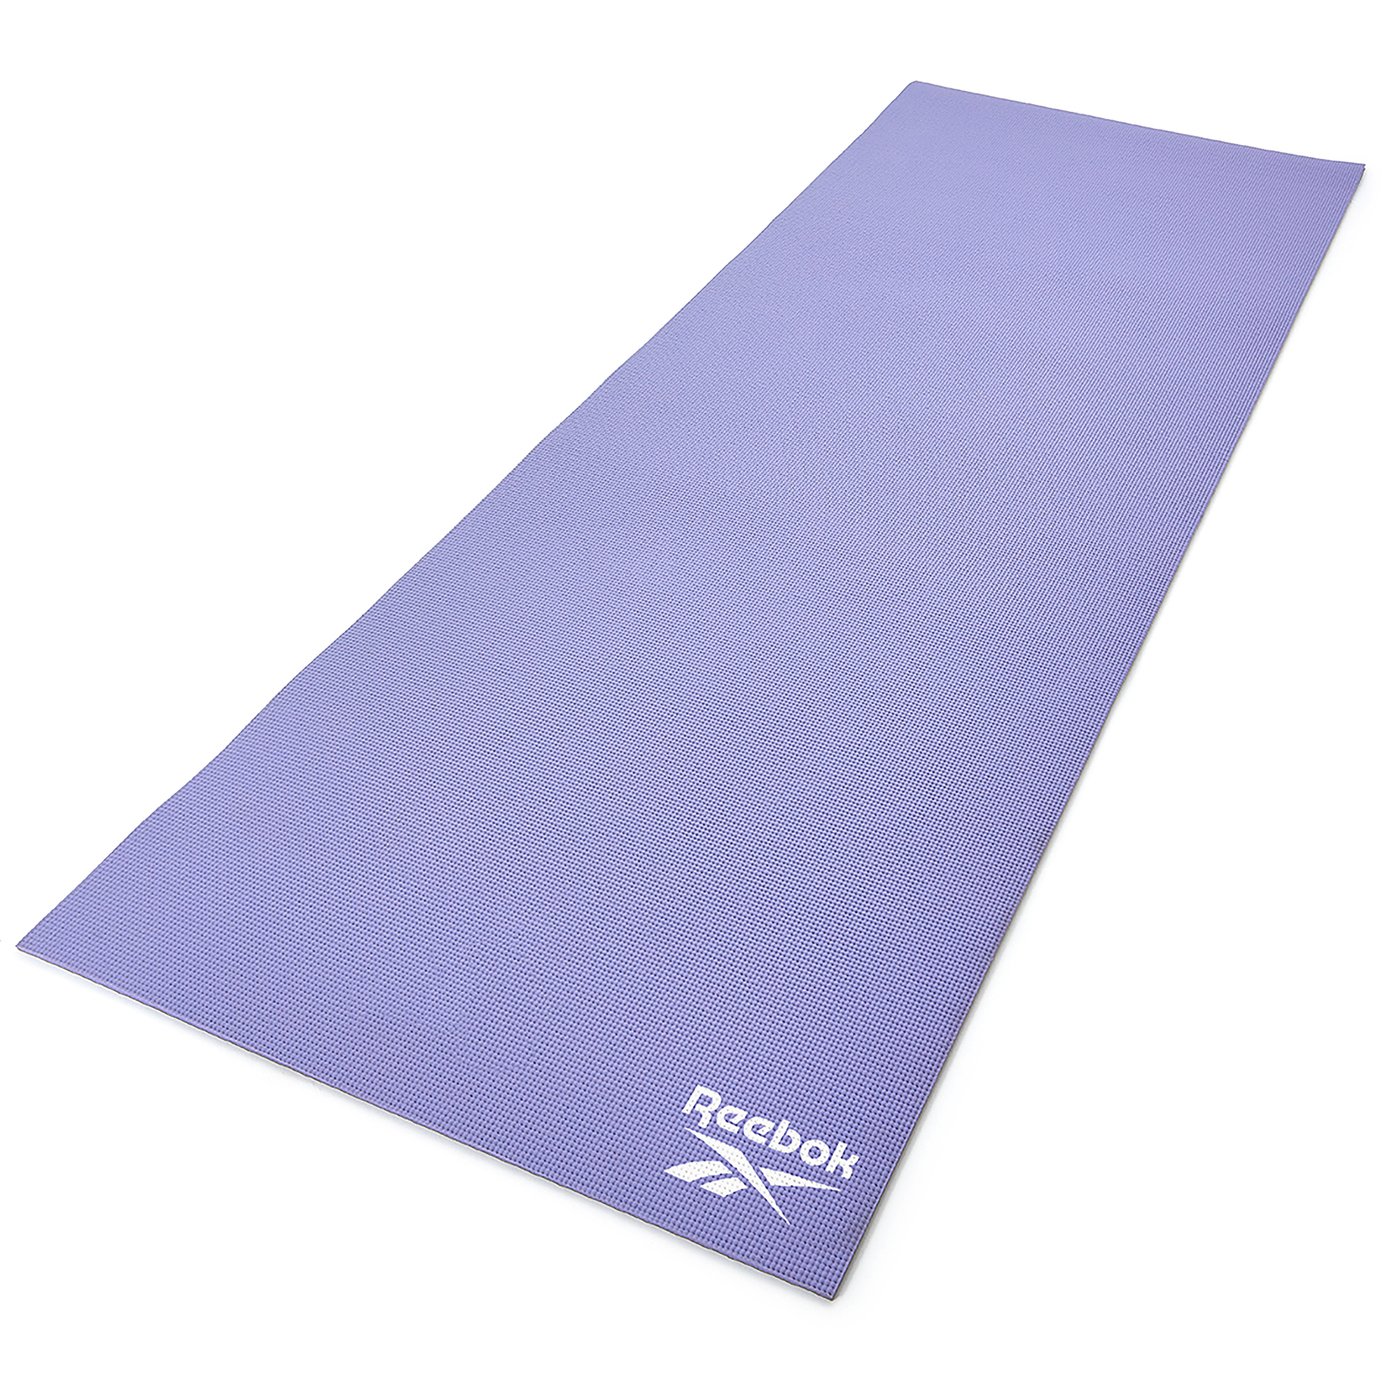 Grey 6mm Thickness Yoga Mat 